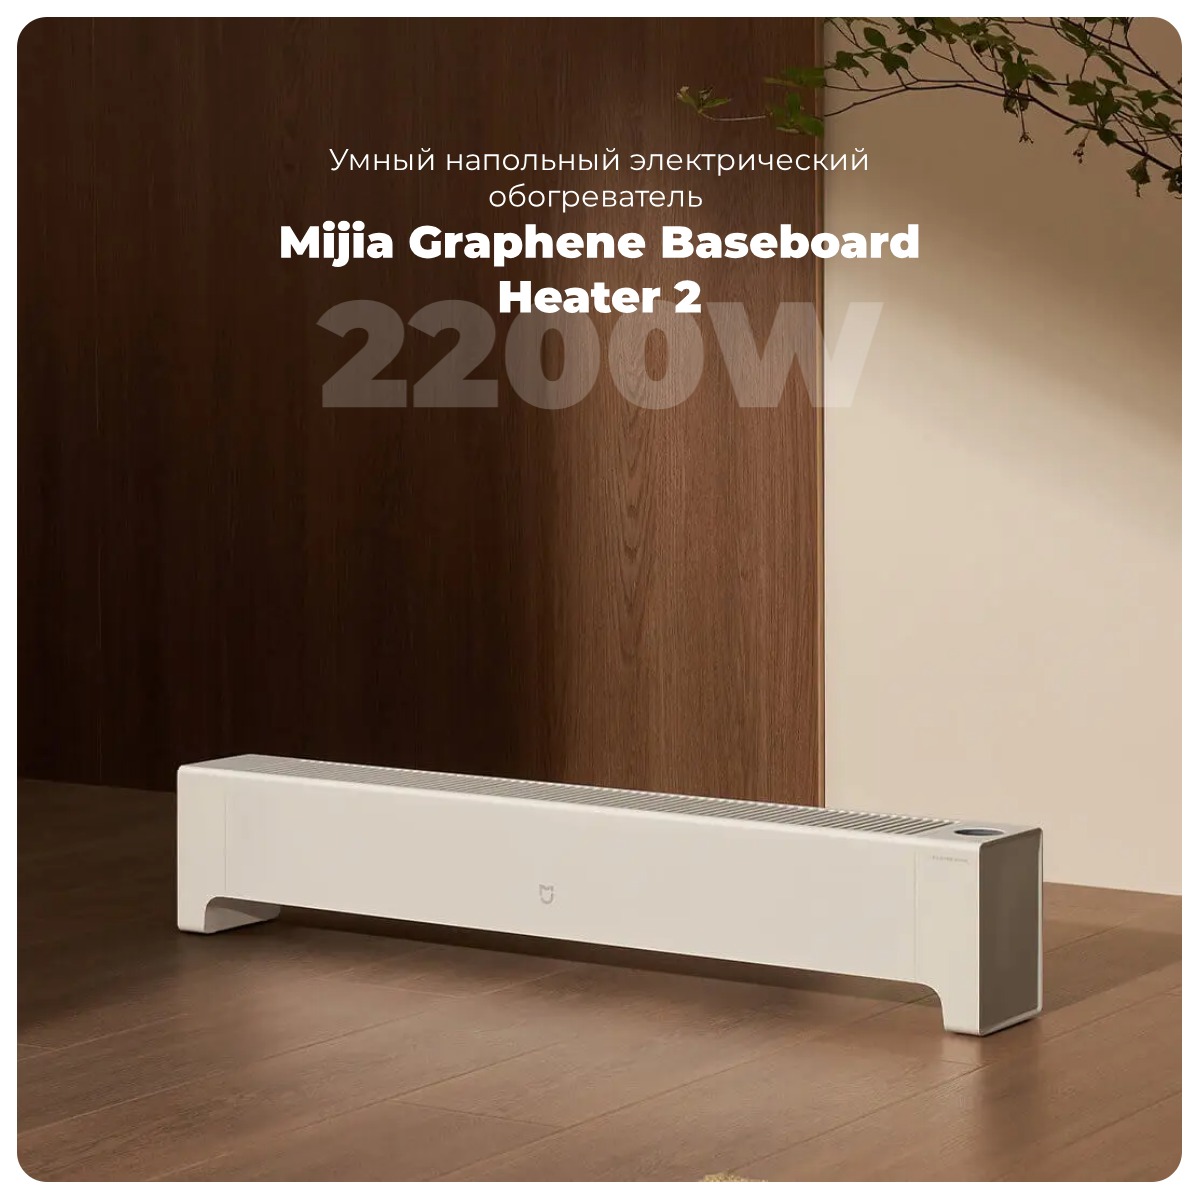 Mijia-Graphene-Baseboard-Heater-2-01